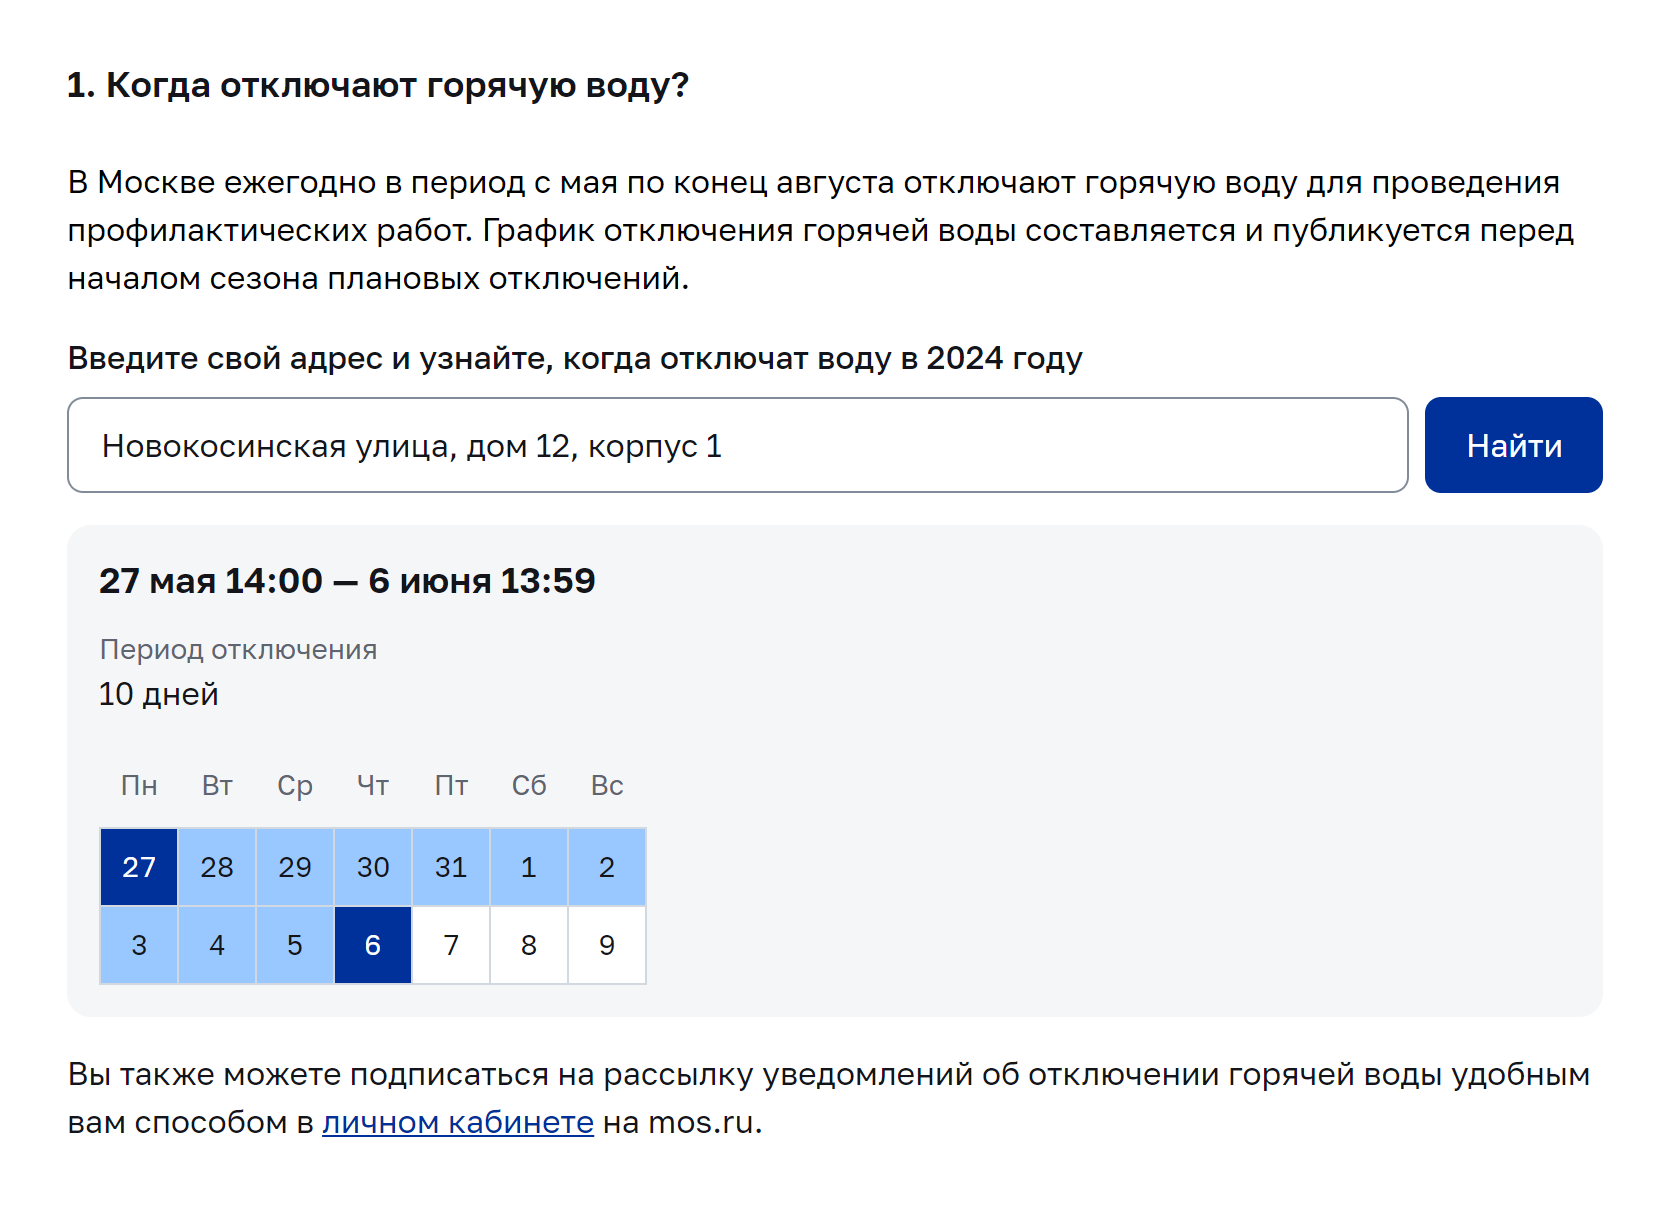 График отключения на сайте mos.ru. Источник: mos.ru